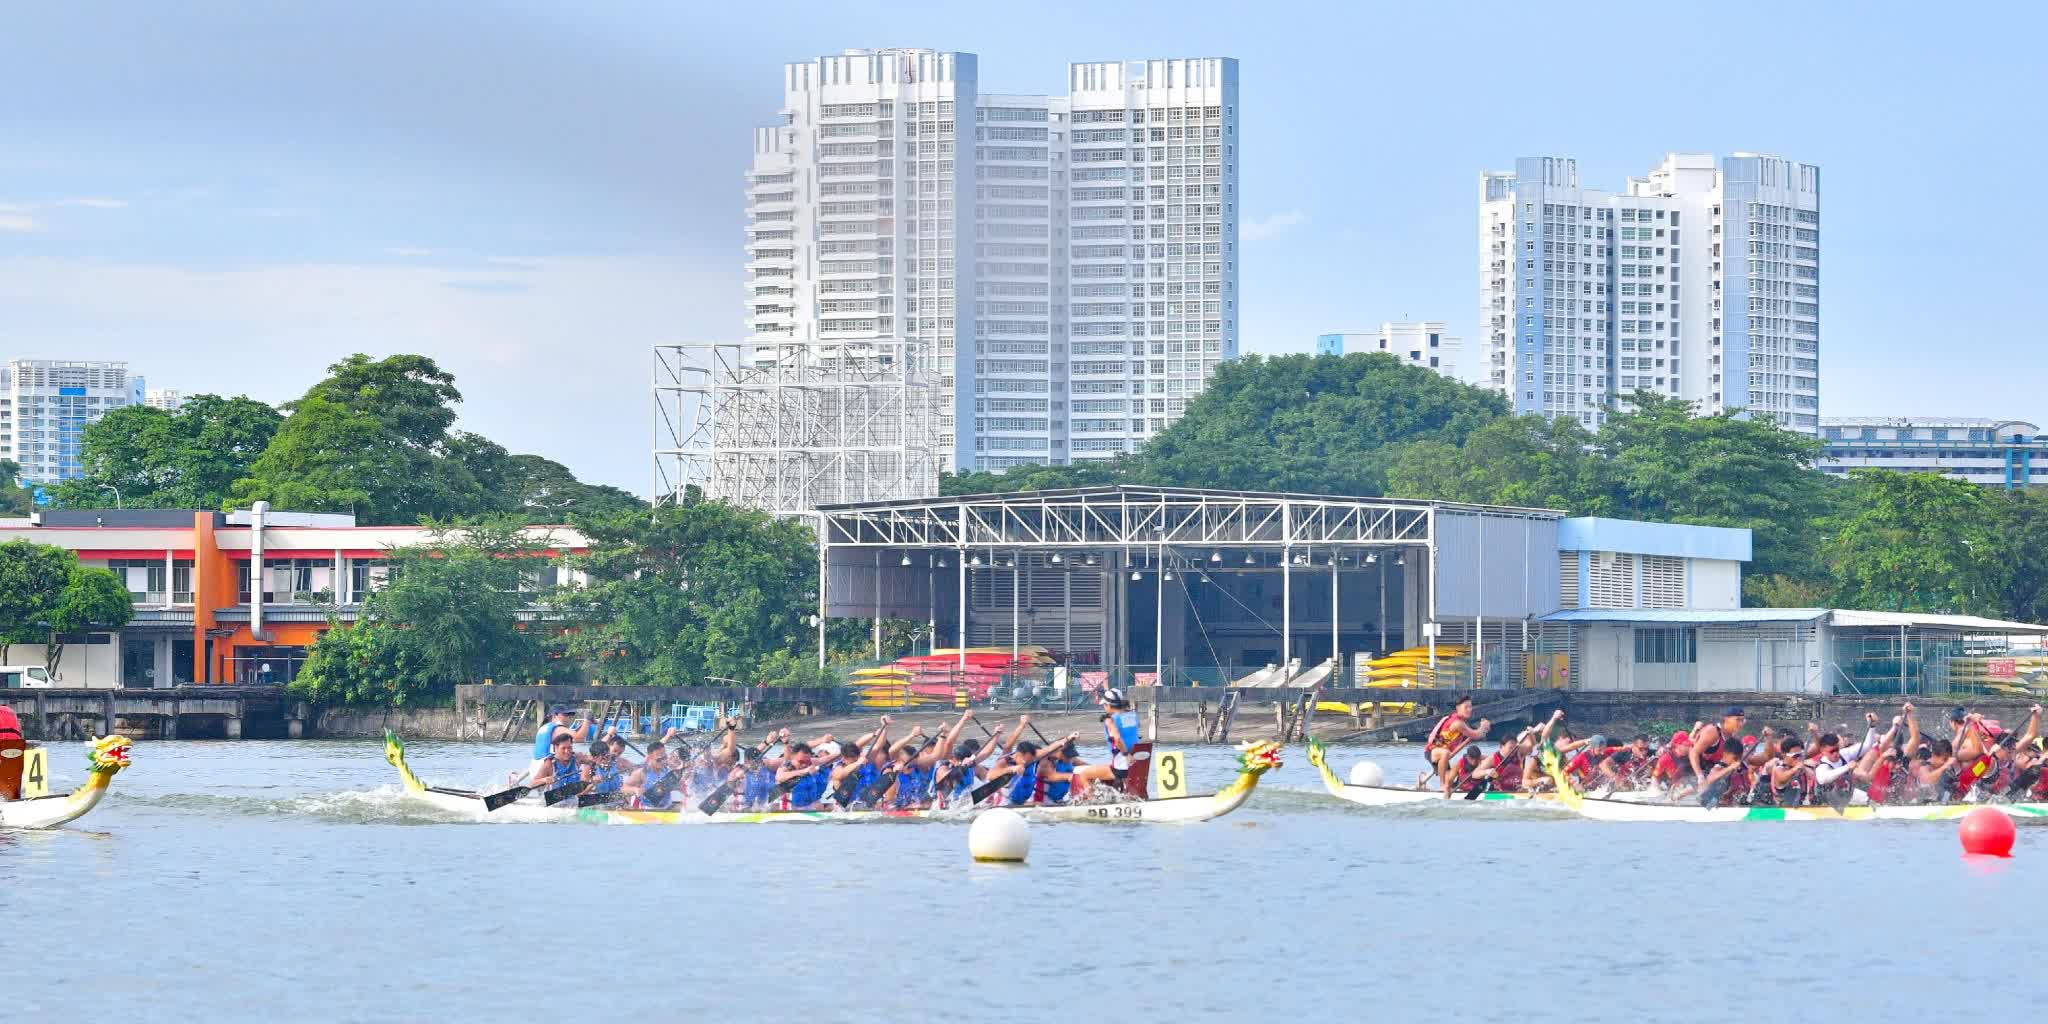 HK Cup 2022 dragon boat races held in Singapore to celebrate 25th anniversary of establishment of HKSAR